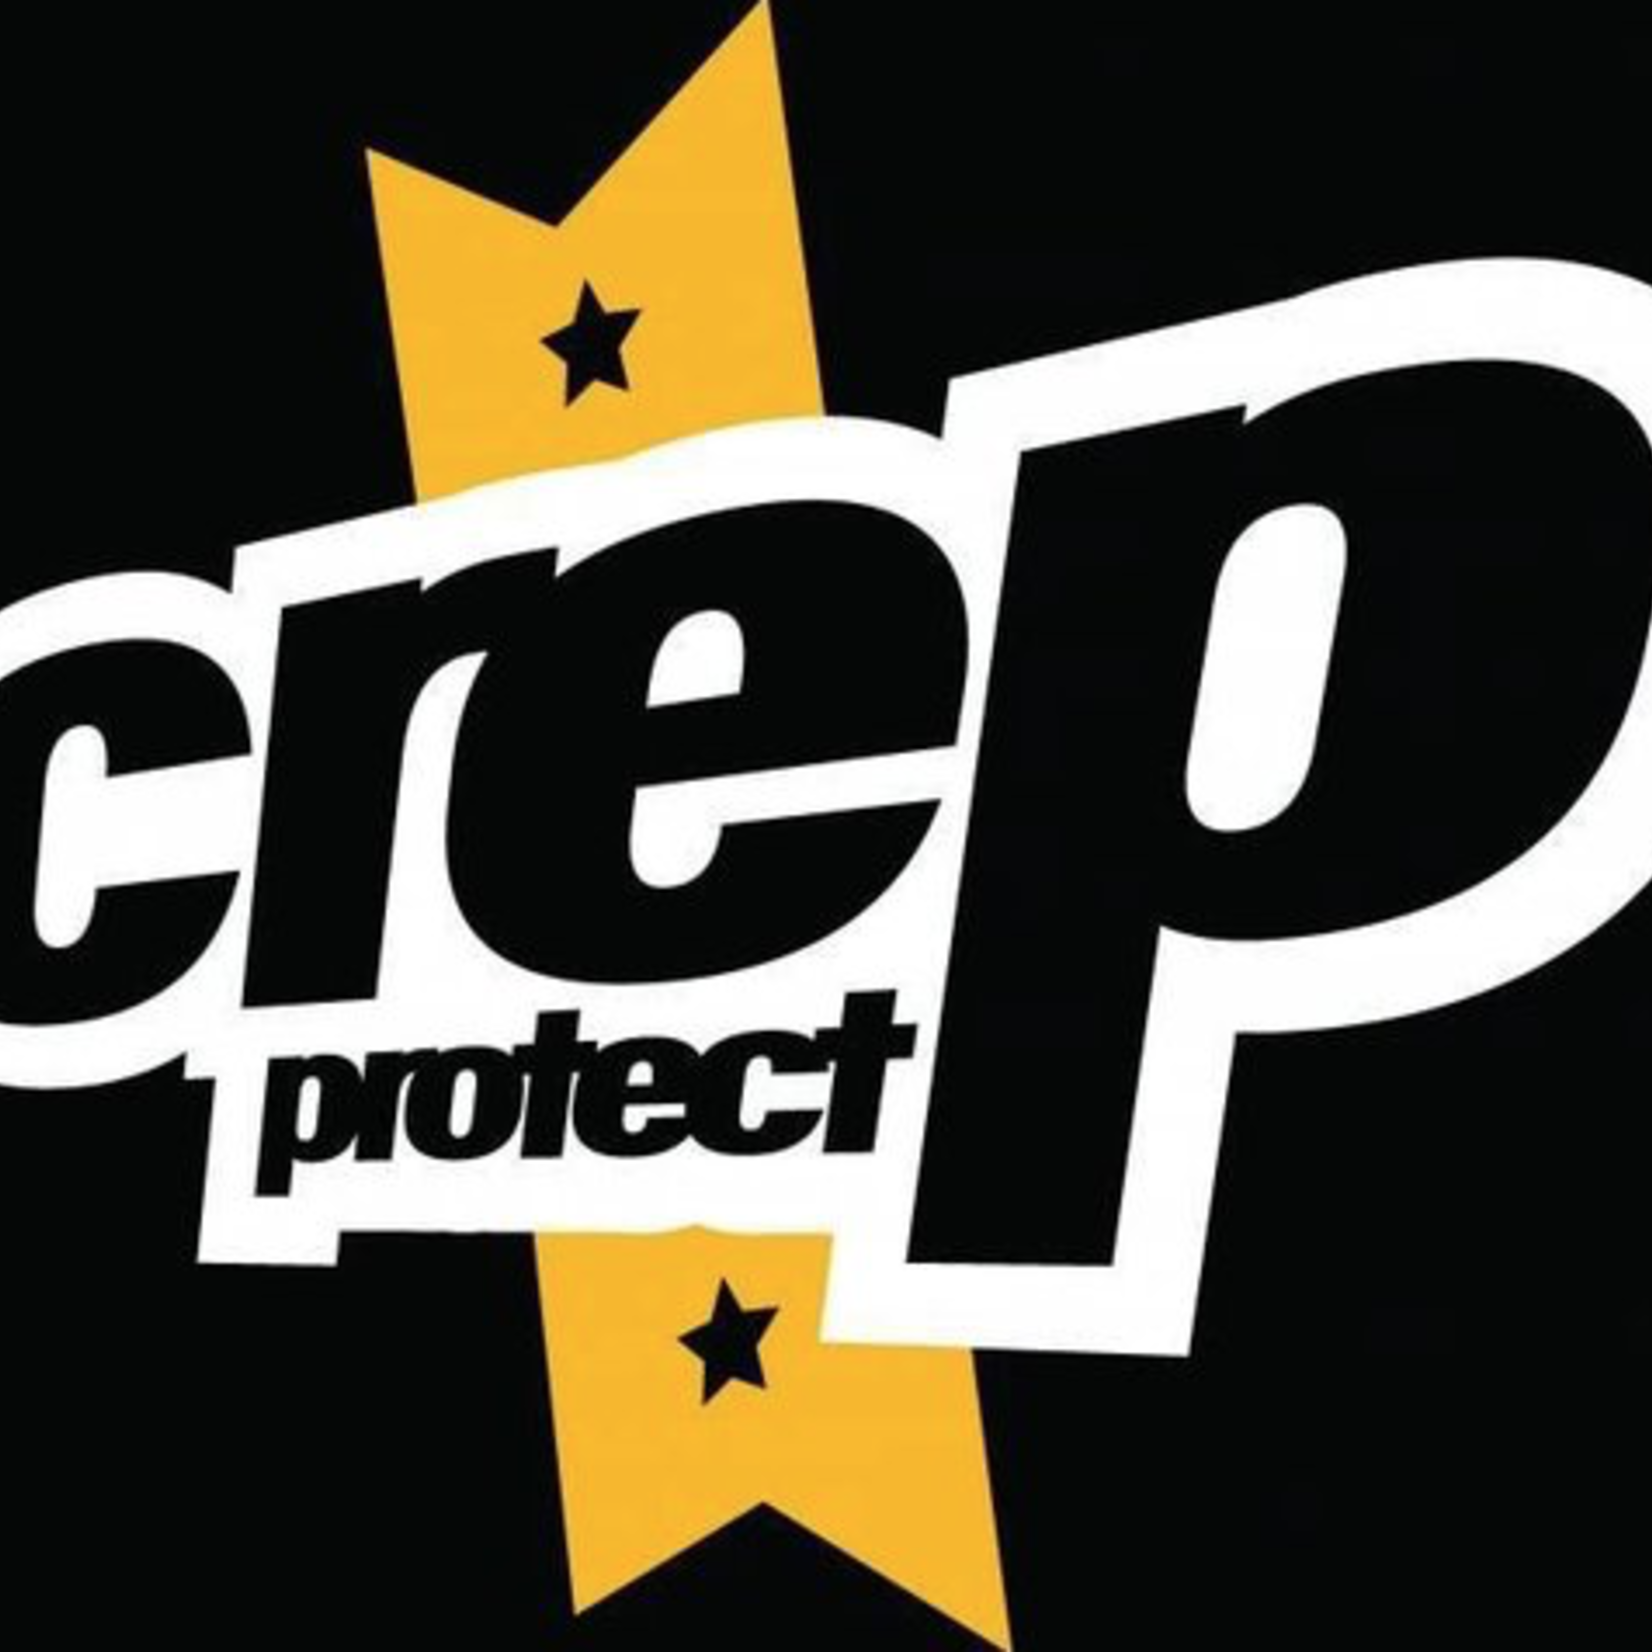 Crep Protect Sneaker Spray 200ml